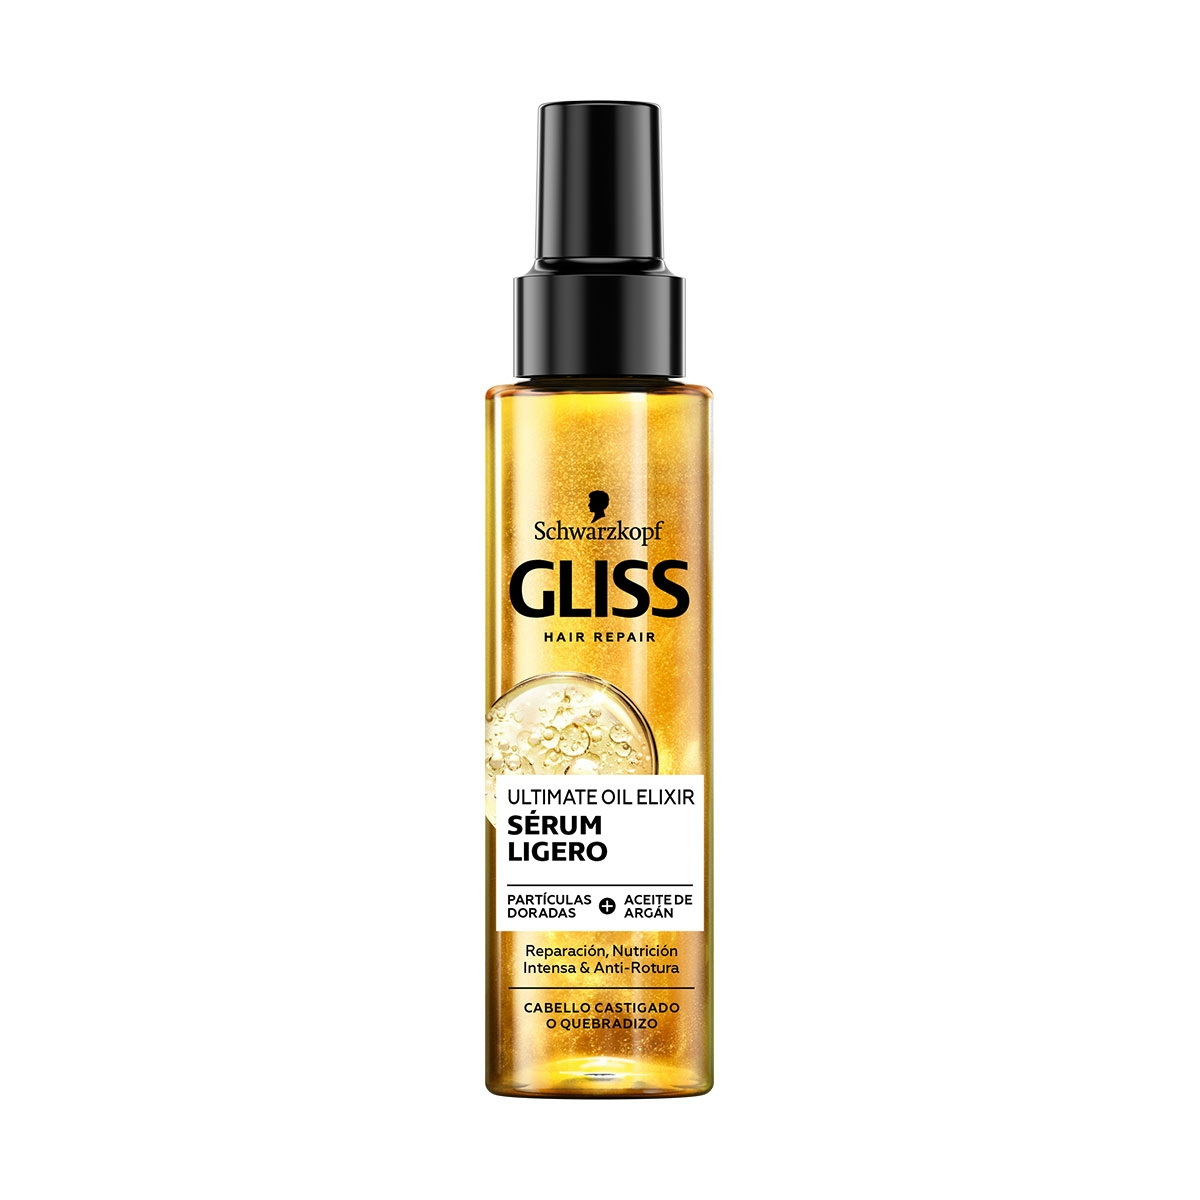 Serum ligero GLISS ultimate oil elixir cabello castigado spray 100 ml